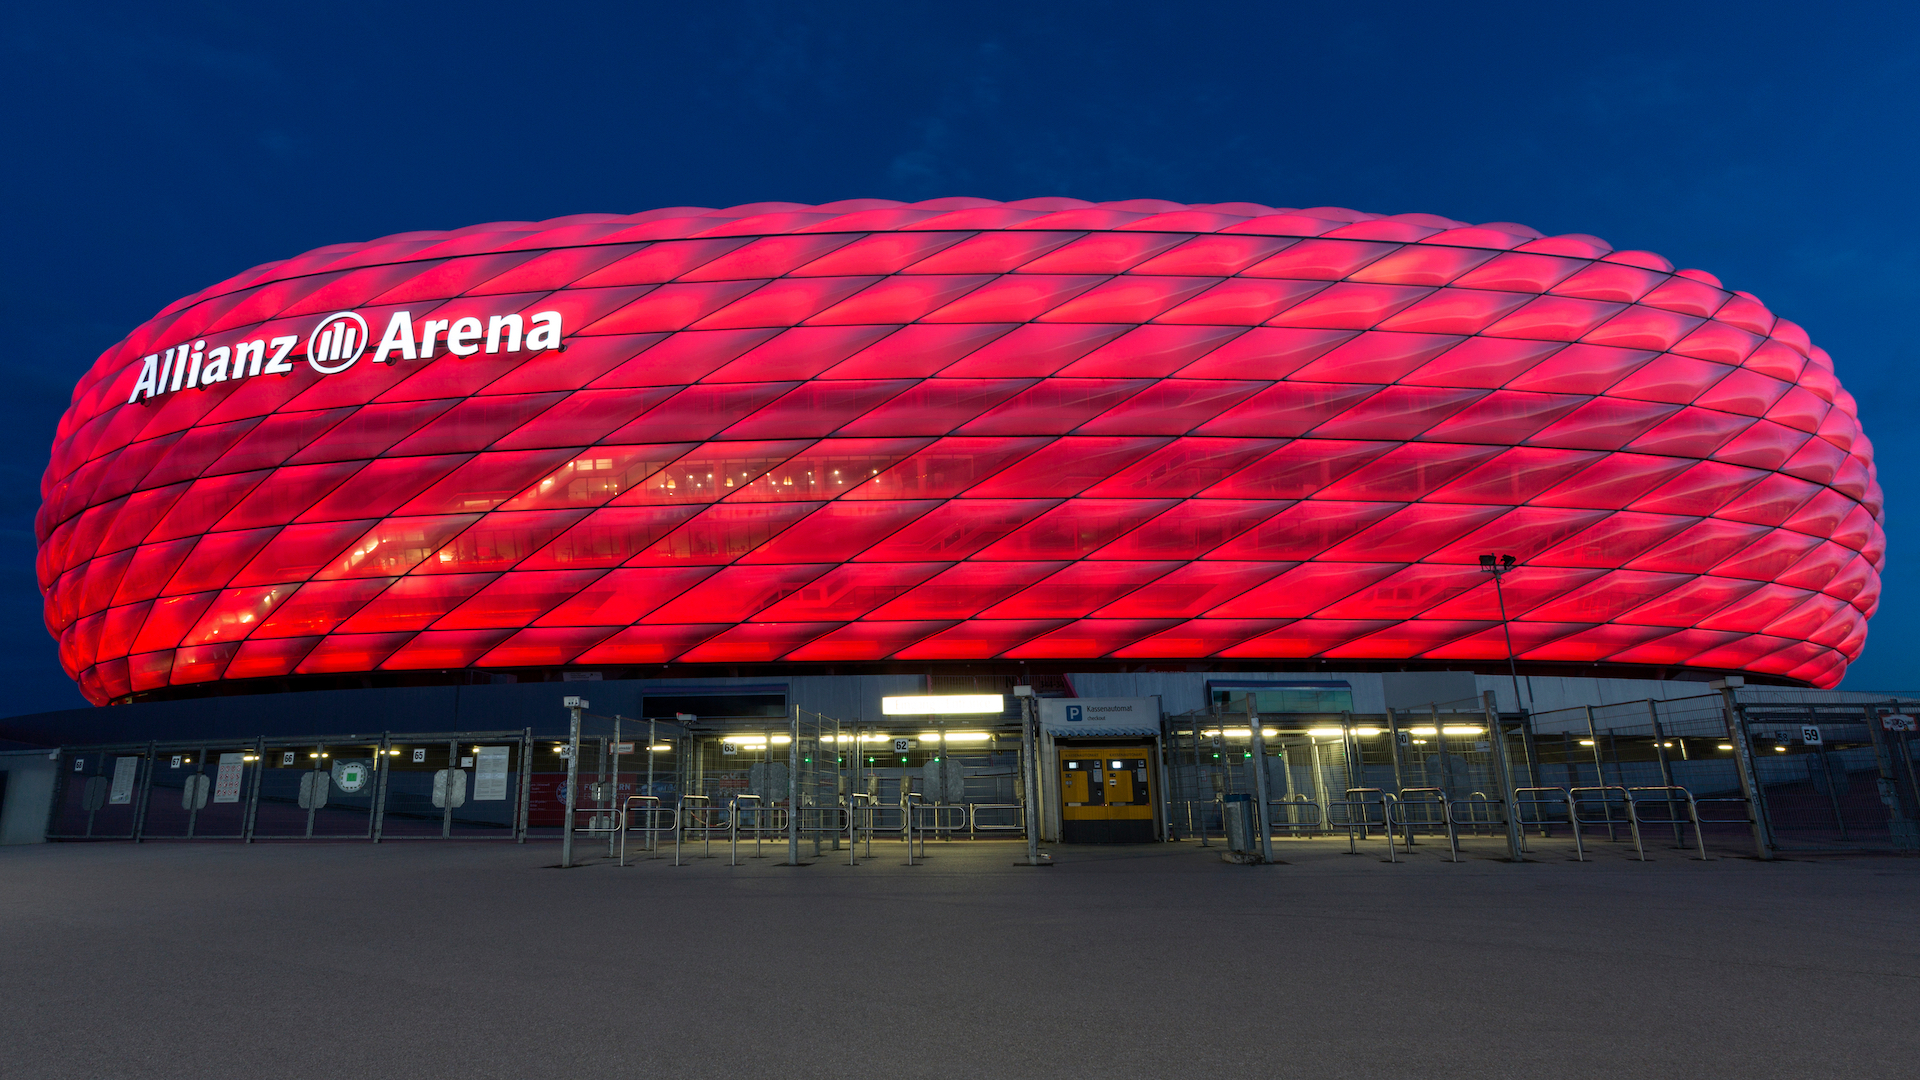 Allianz Arena in Bavaria, Germany